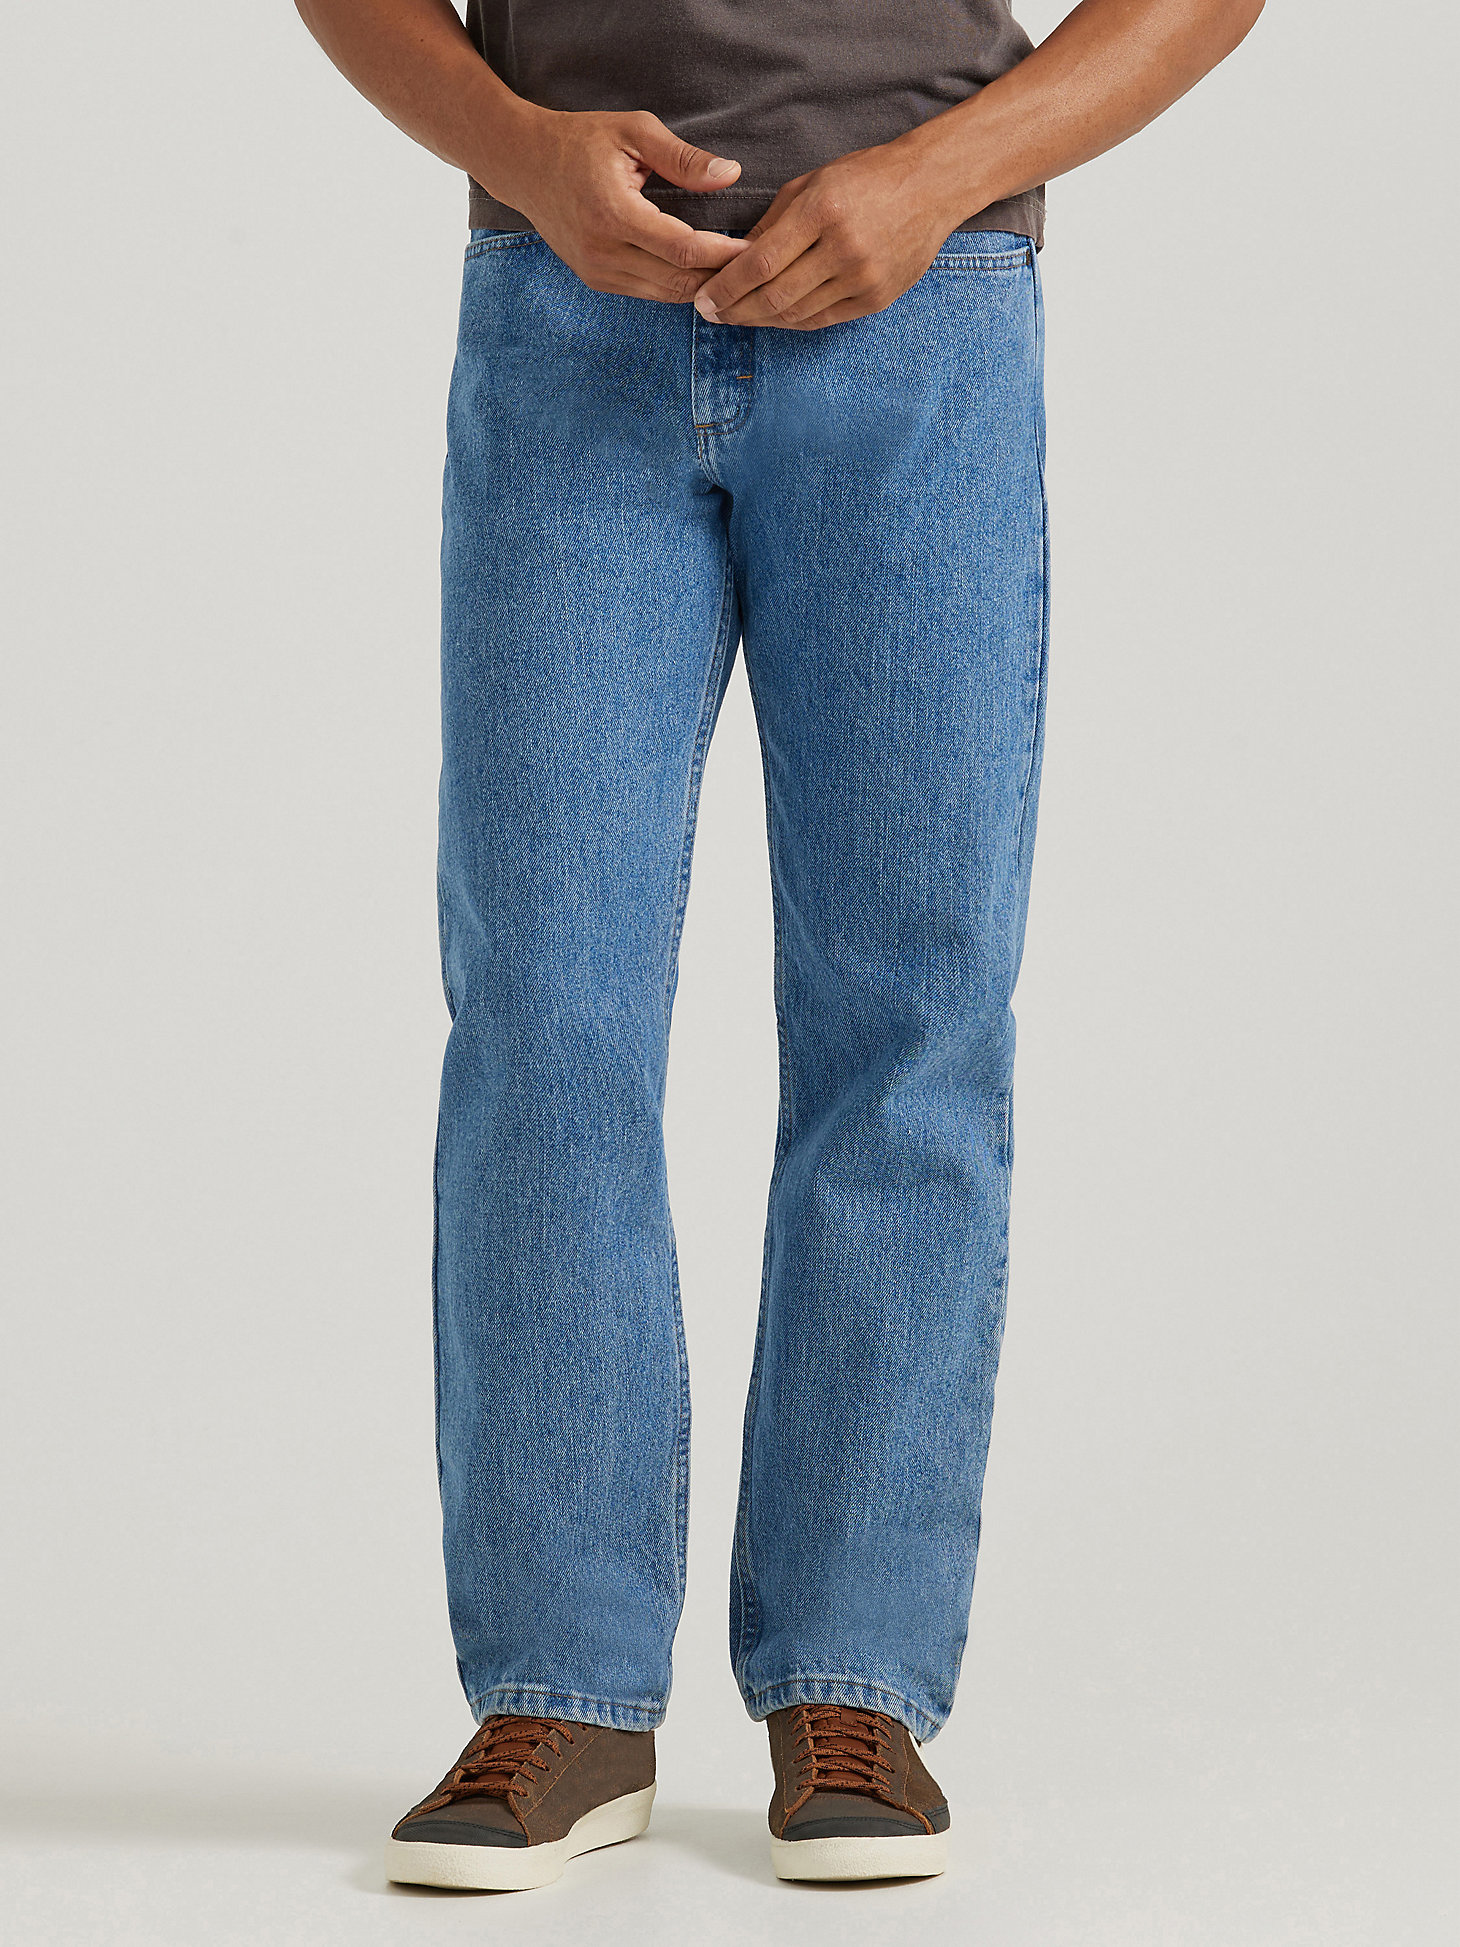 Wrangler® Five Star Premium Denim Relaxed Fit Jean in Stone Bleach main view